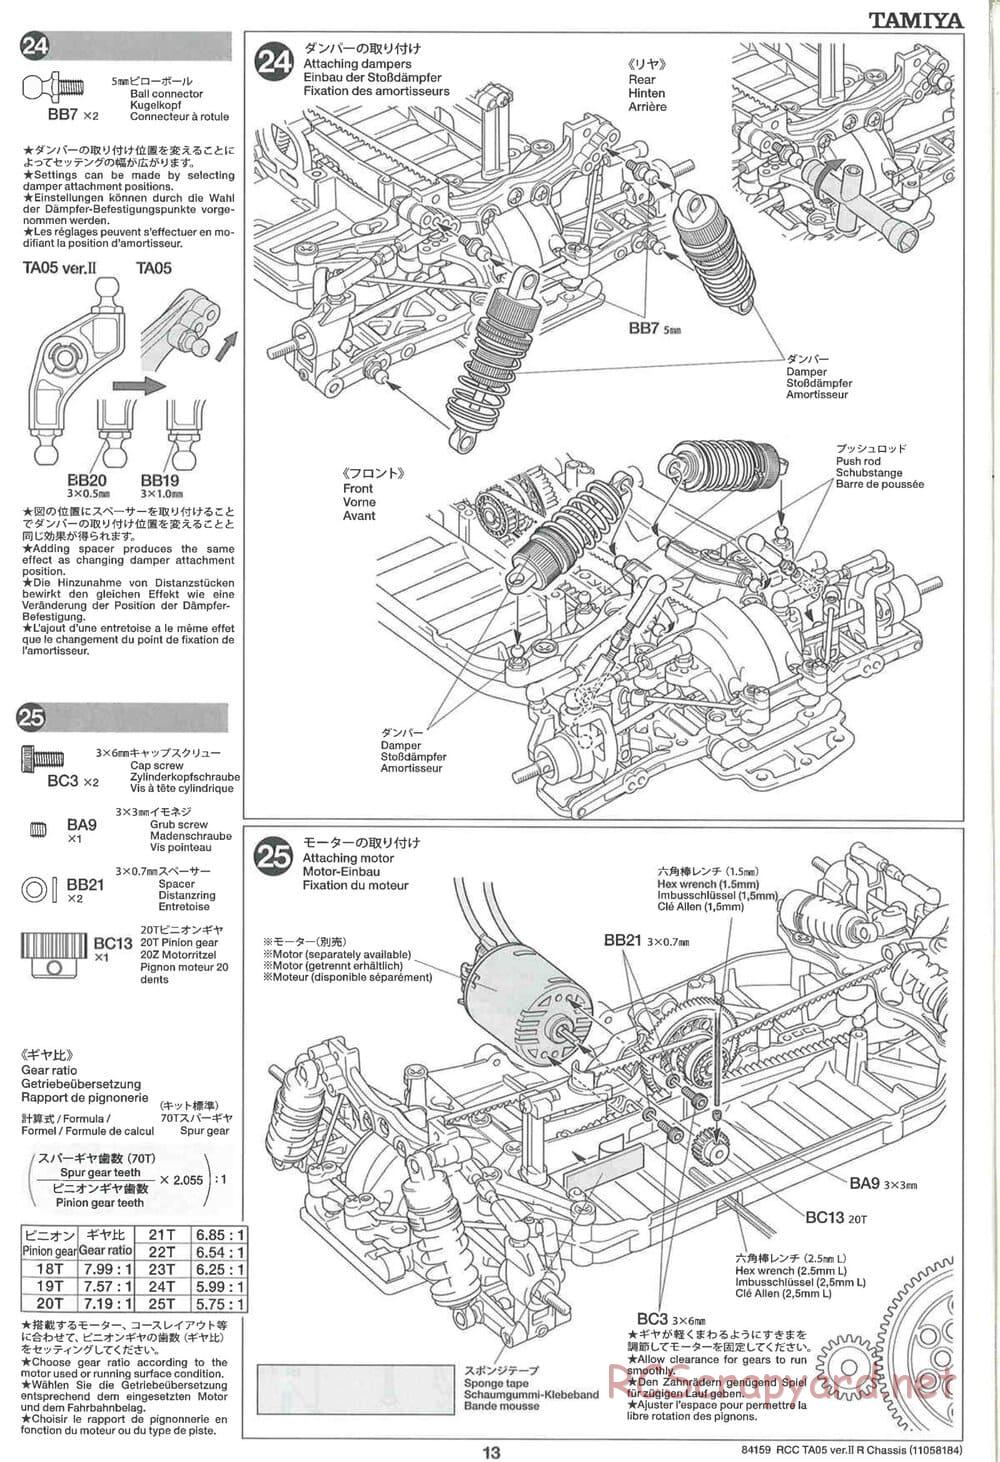 Tamiya - TA05 Ver.II R Chassis - Manual - Page 13